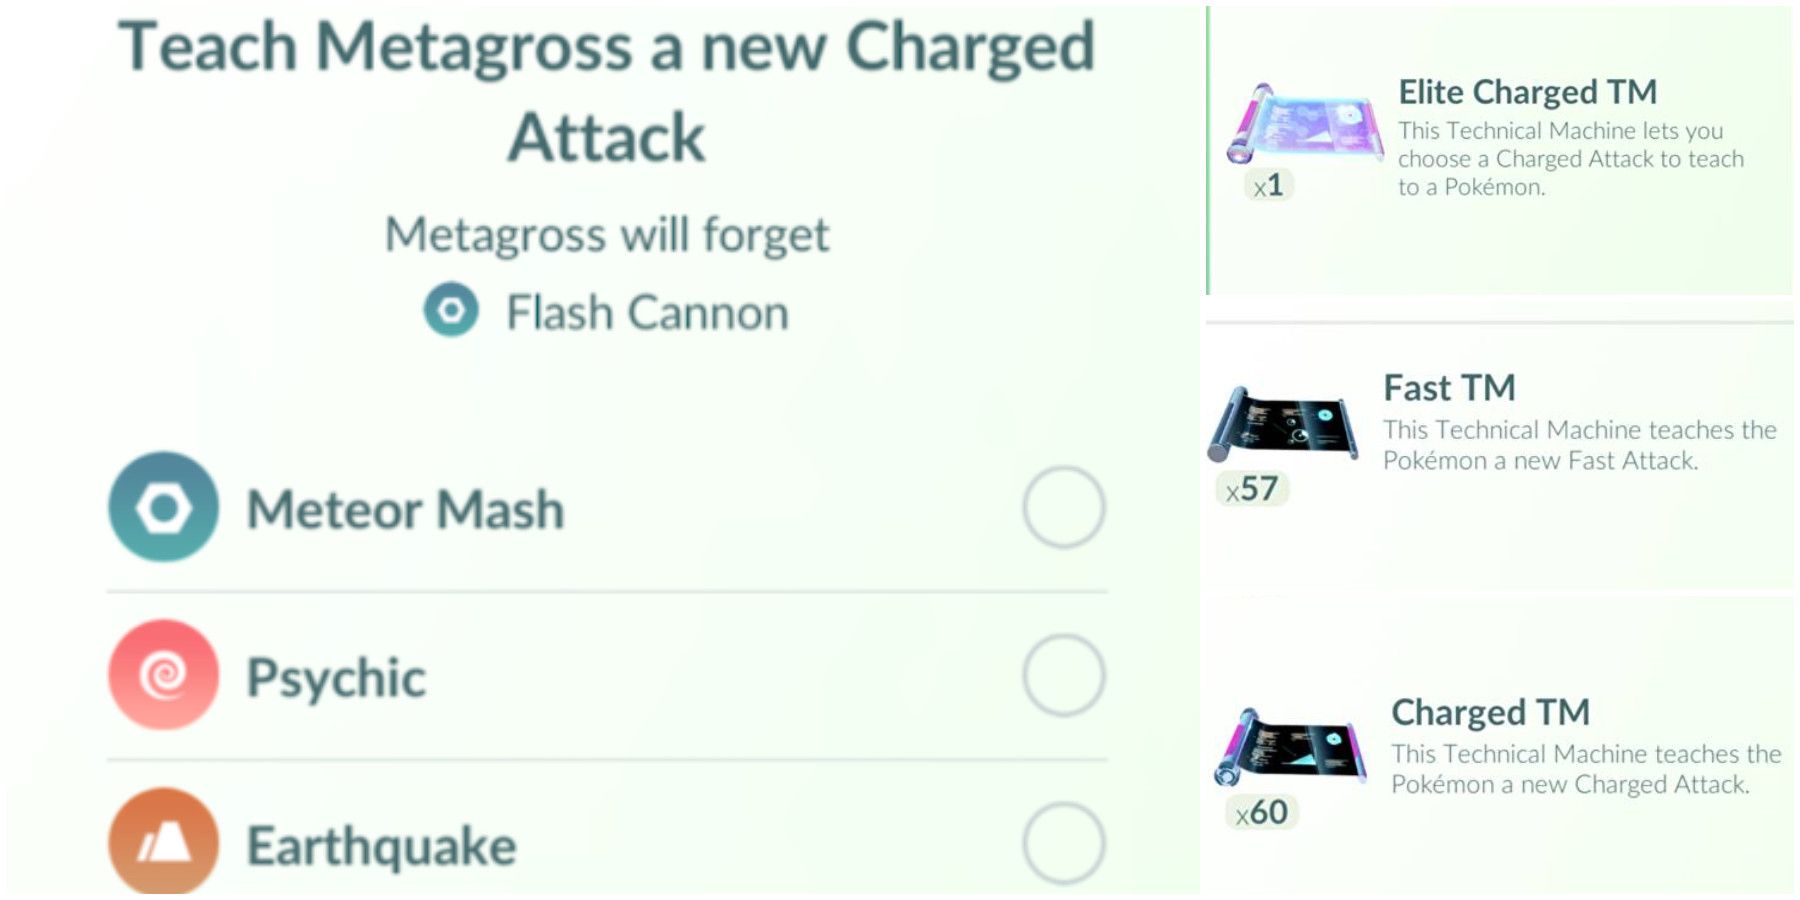 Pokémon GO Hundo Mewtwo – Mini Account (Read Describe) - PoGoFighter